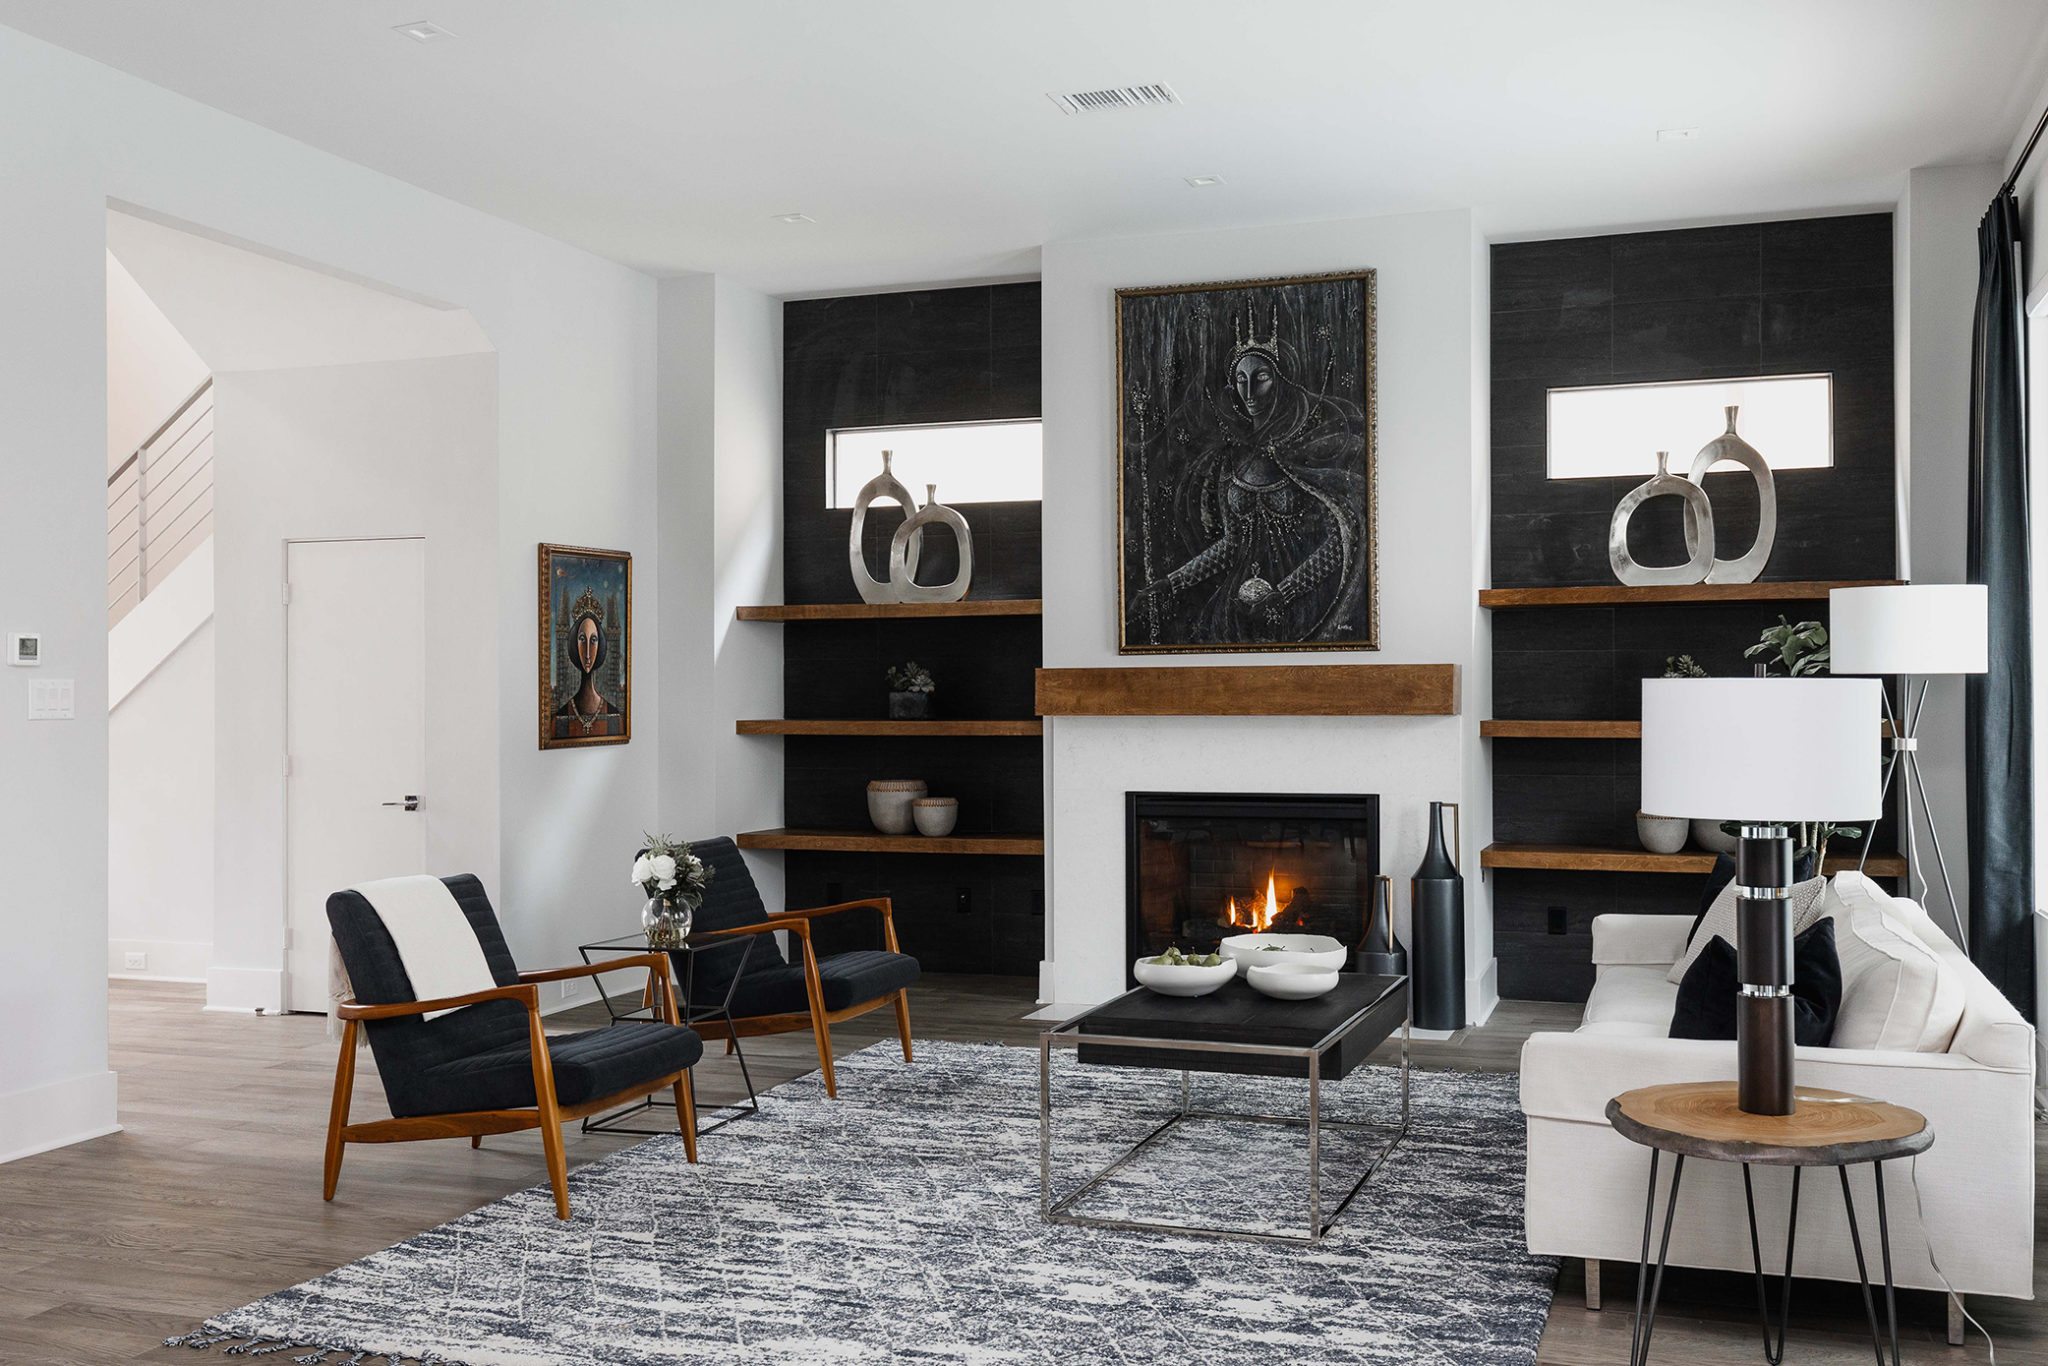 Luxury Living Room Design Ideas